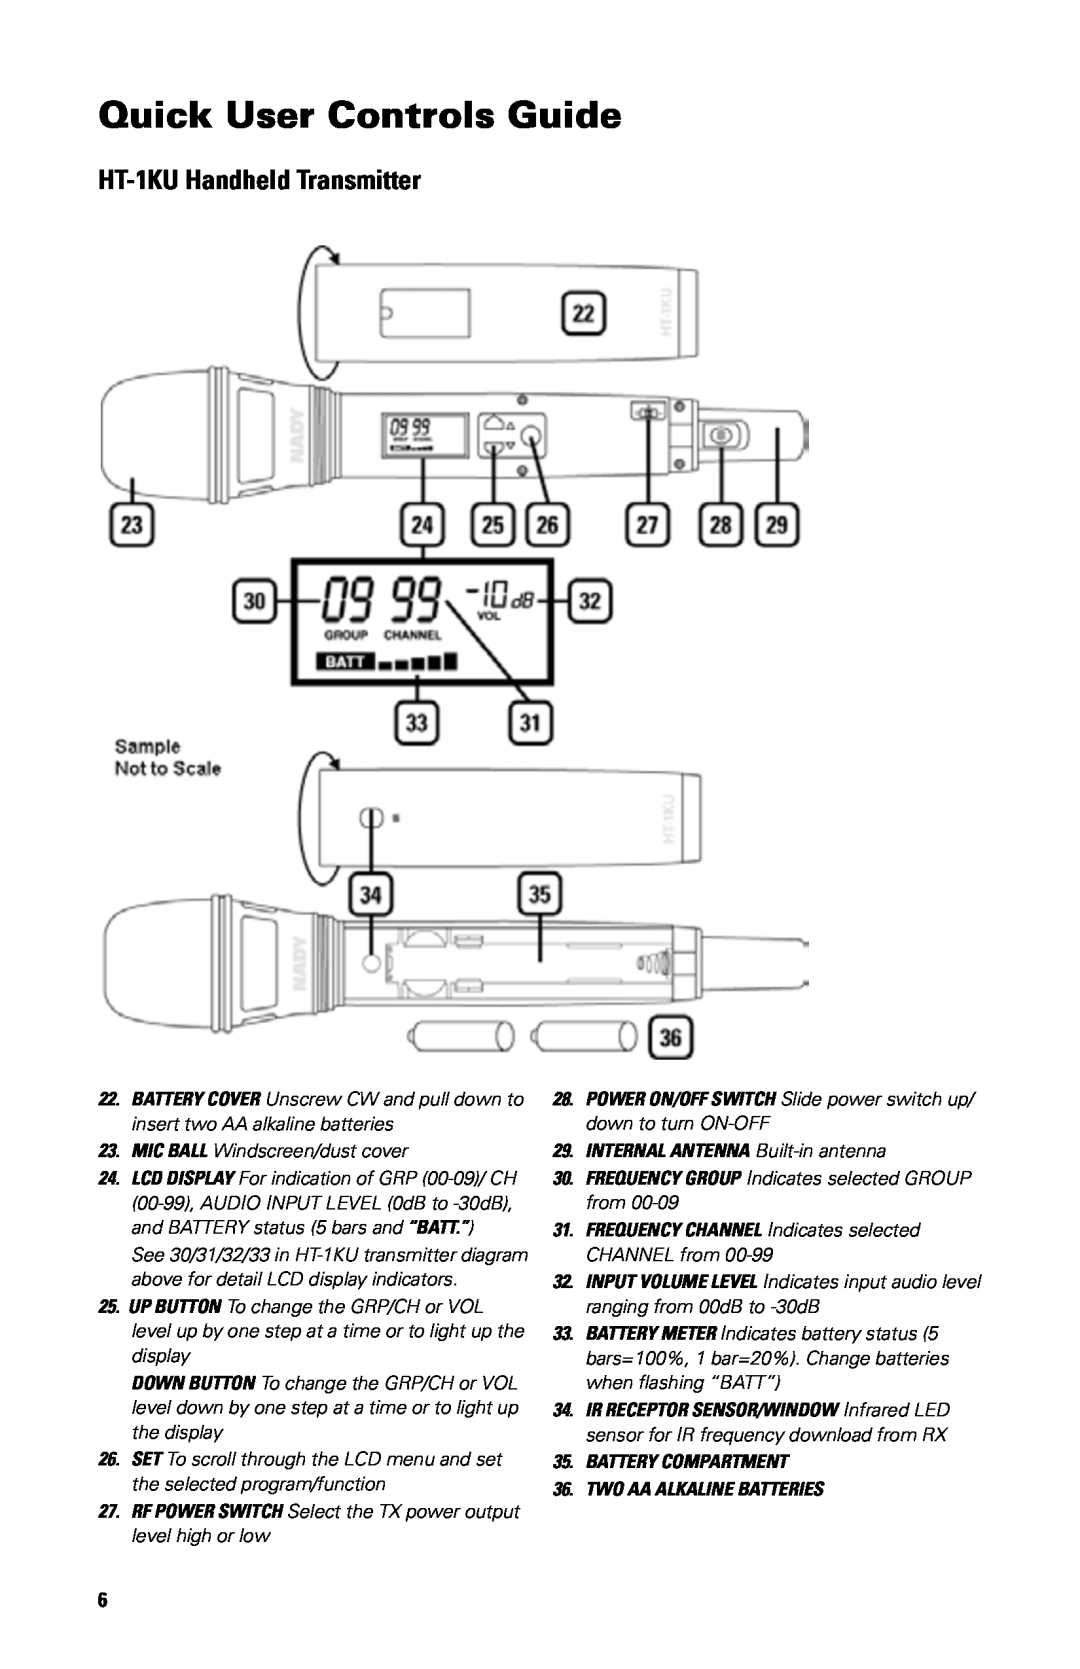 Nady Systems SW-1KU owner manual HT-1KUHandheld Transmitter, Quick User Controls Guide, INTERNAL ANTENNA Built-inantenna 